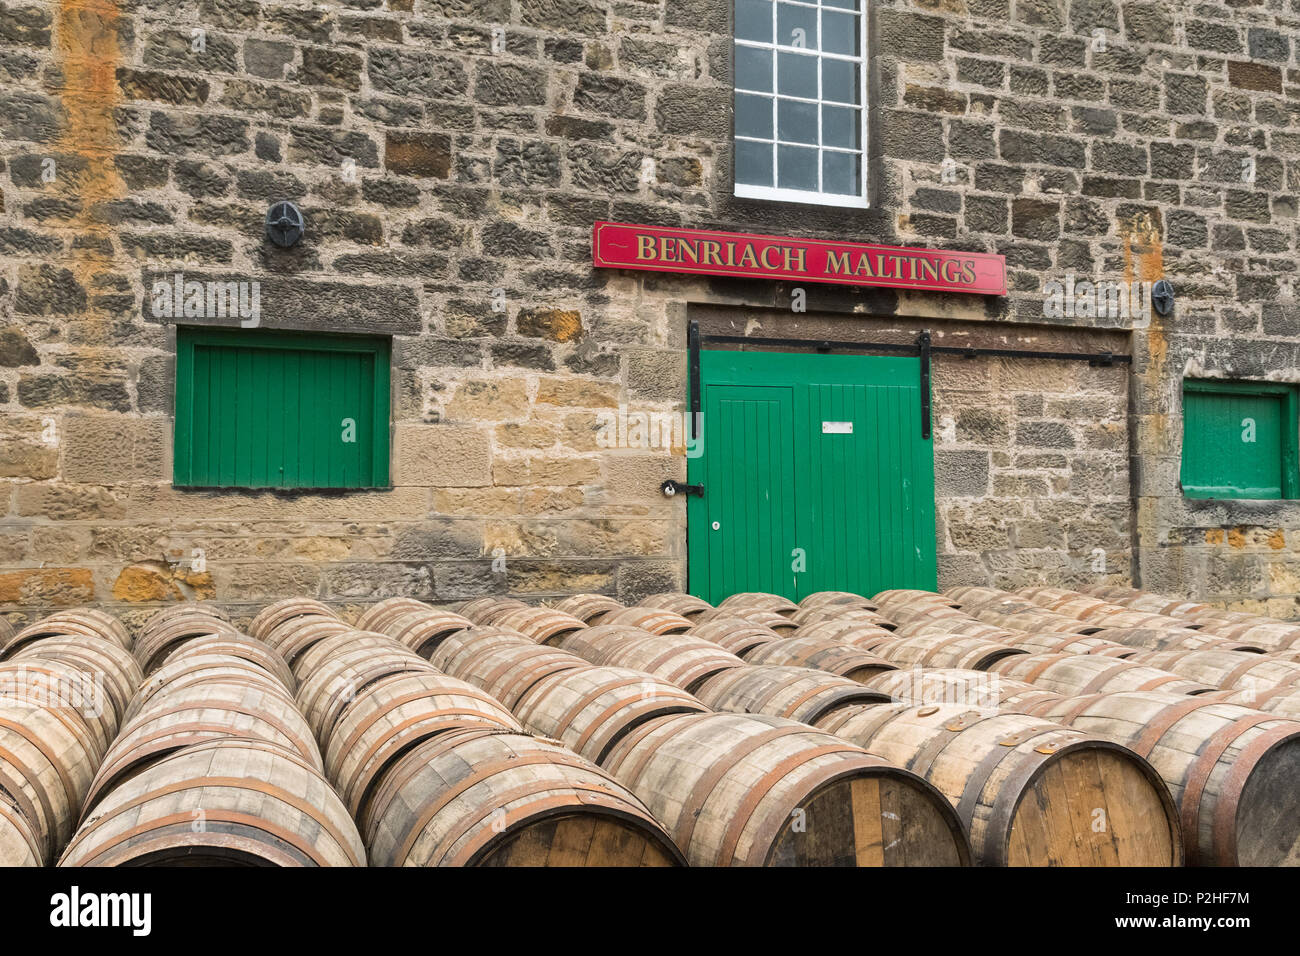 Benriach maltings - BenRiach distilleria di whisky, murene, Scotland, Regno Unito Foto Stock